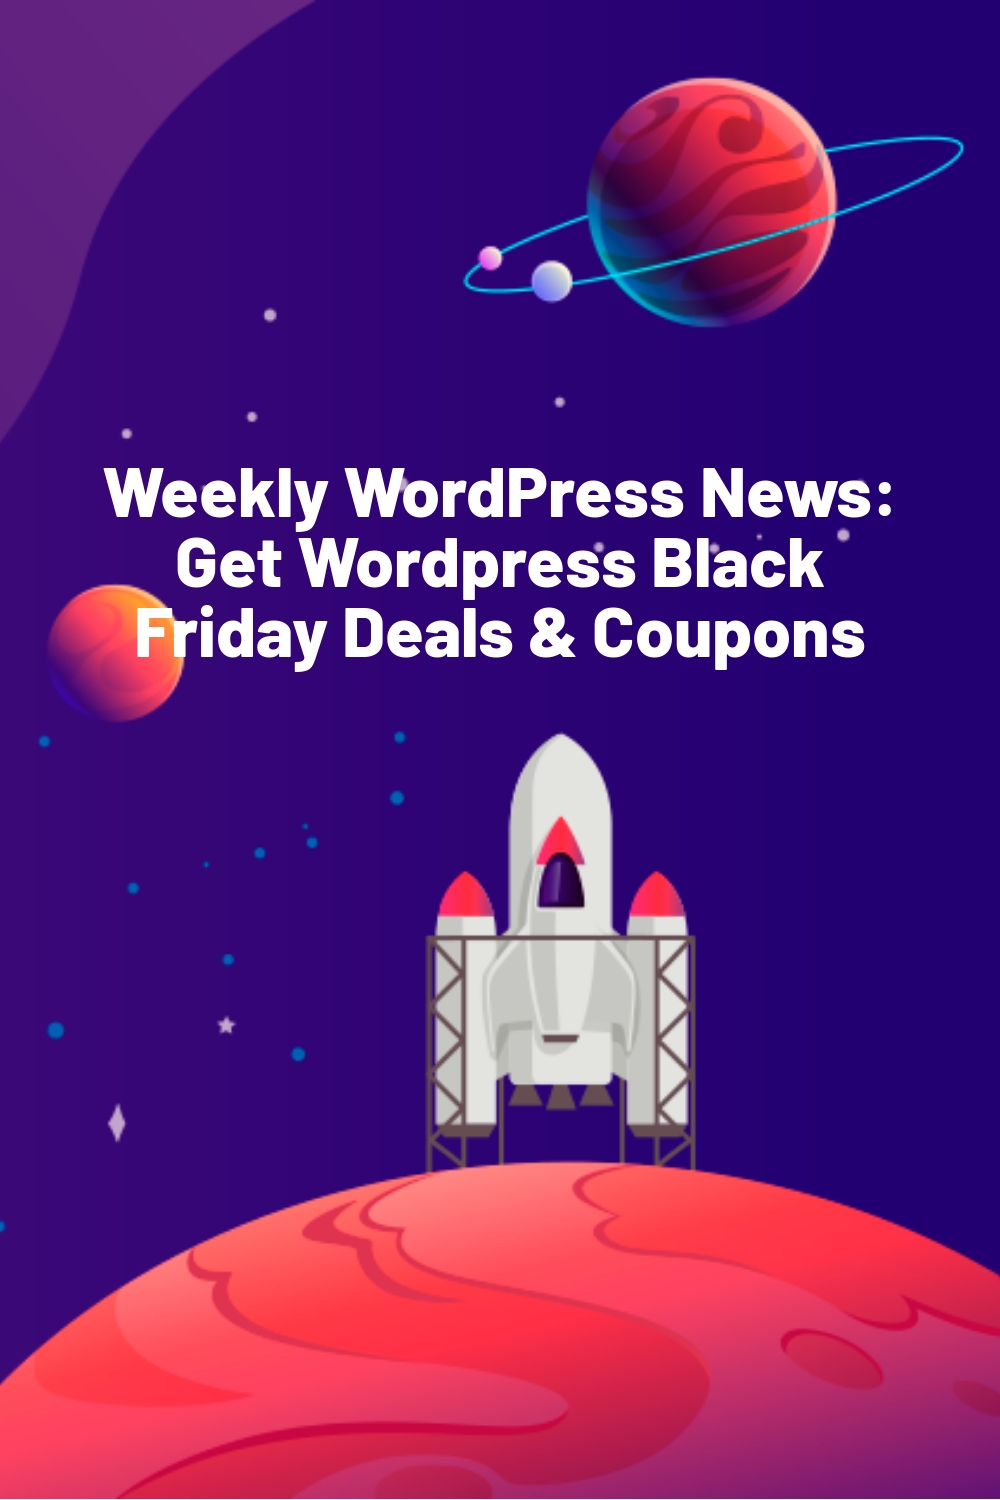 Weekly WordPress News: Get WordPress Black Friday Deals & Coupons